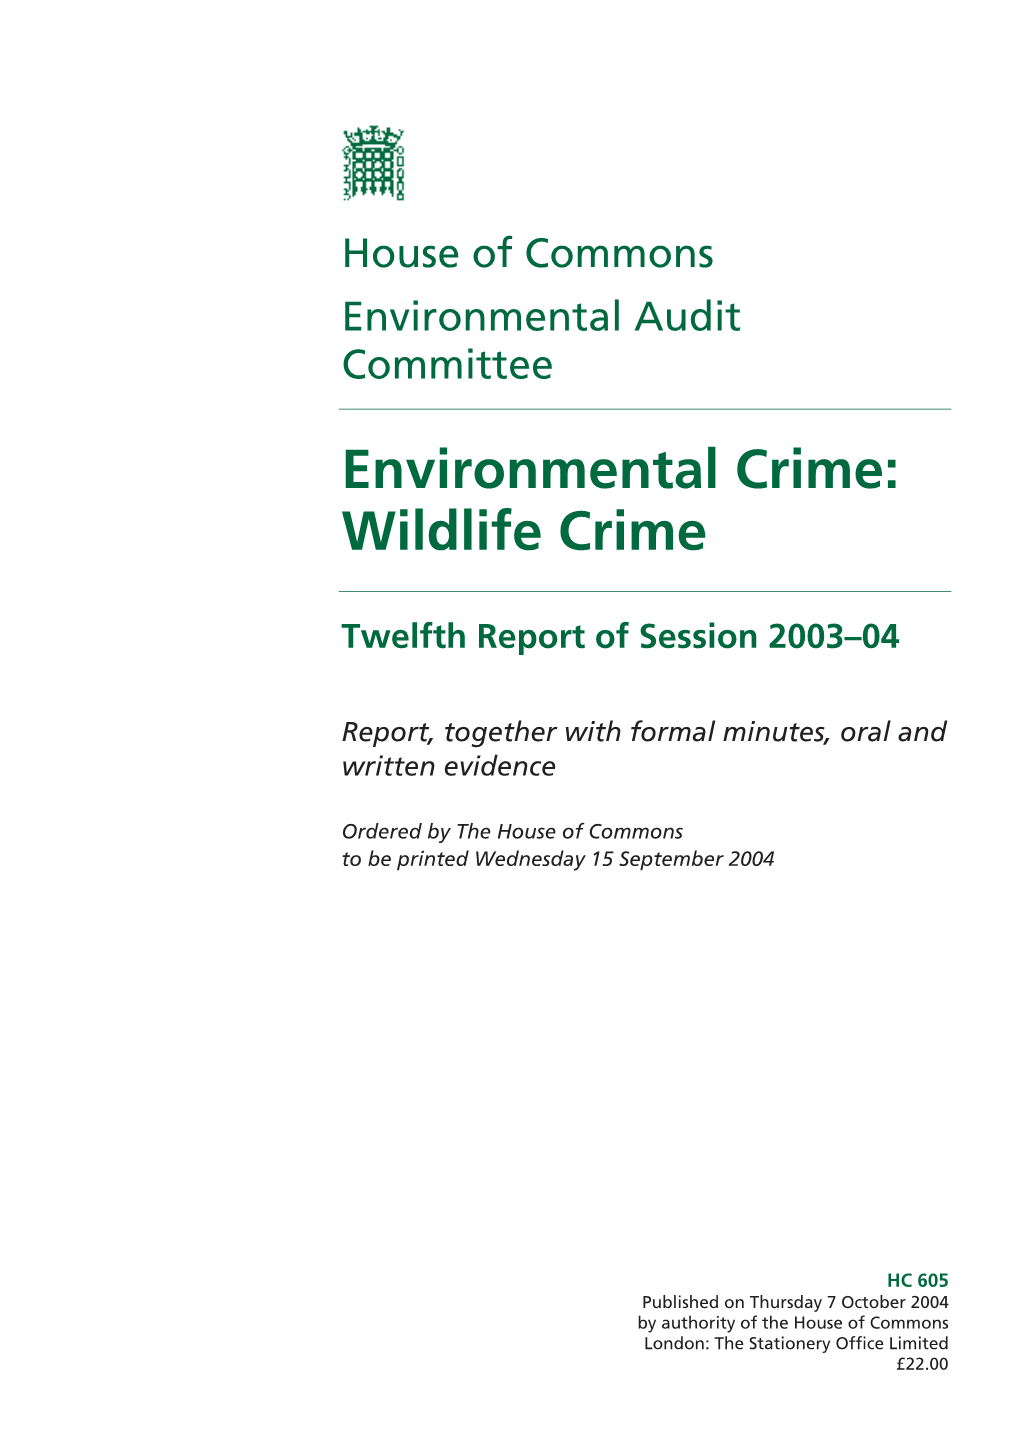 Environmental Crime: Wildlife Crime